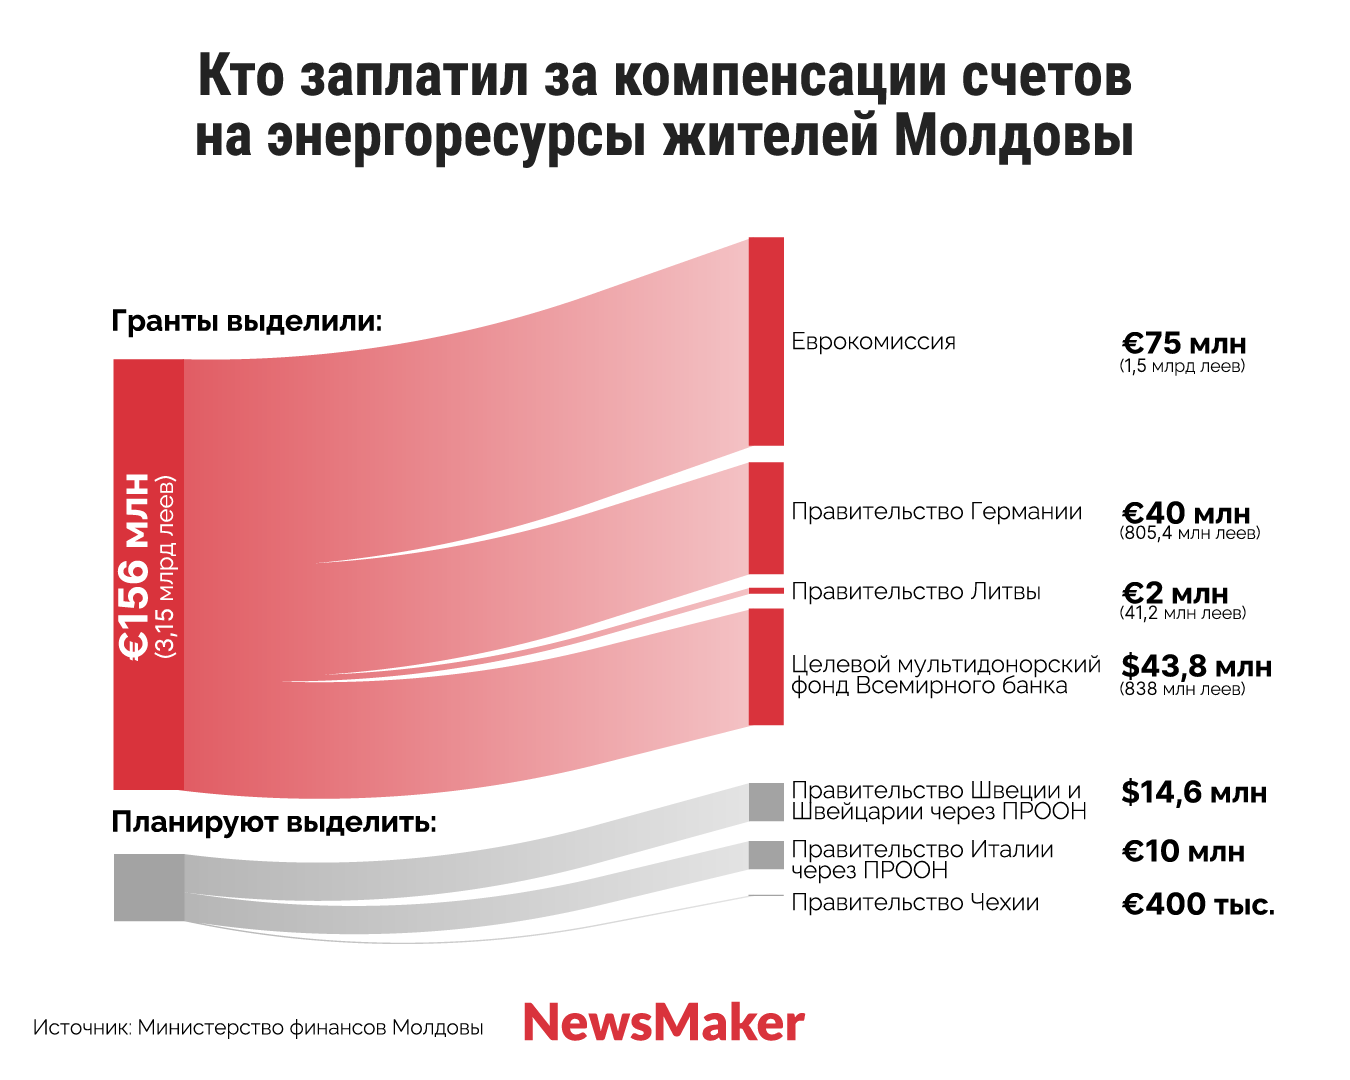 Жителям Молдовы компенсируют счета за энергоресурсы на 5,8 млрд леев. Кто за это платит?